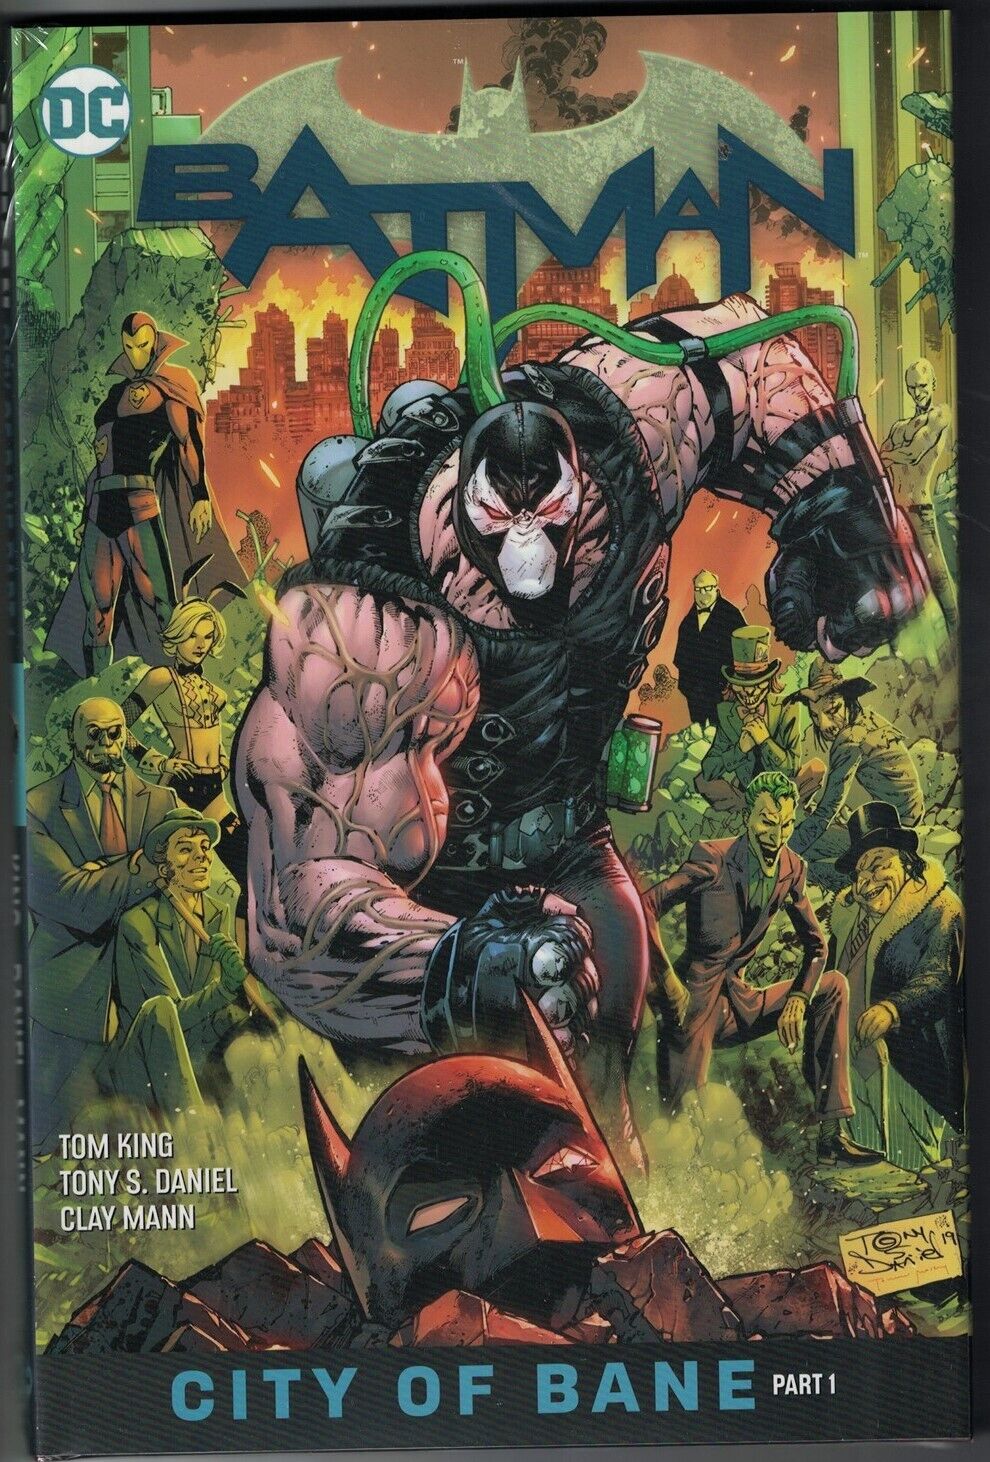 BATMAN CITY OF BANE PART 1 HC Hardcover $24.99srp Tom King Tony Daniel NEW NM